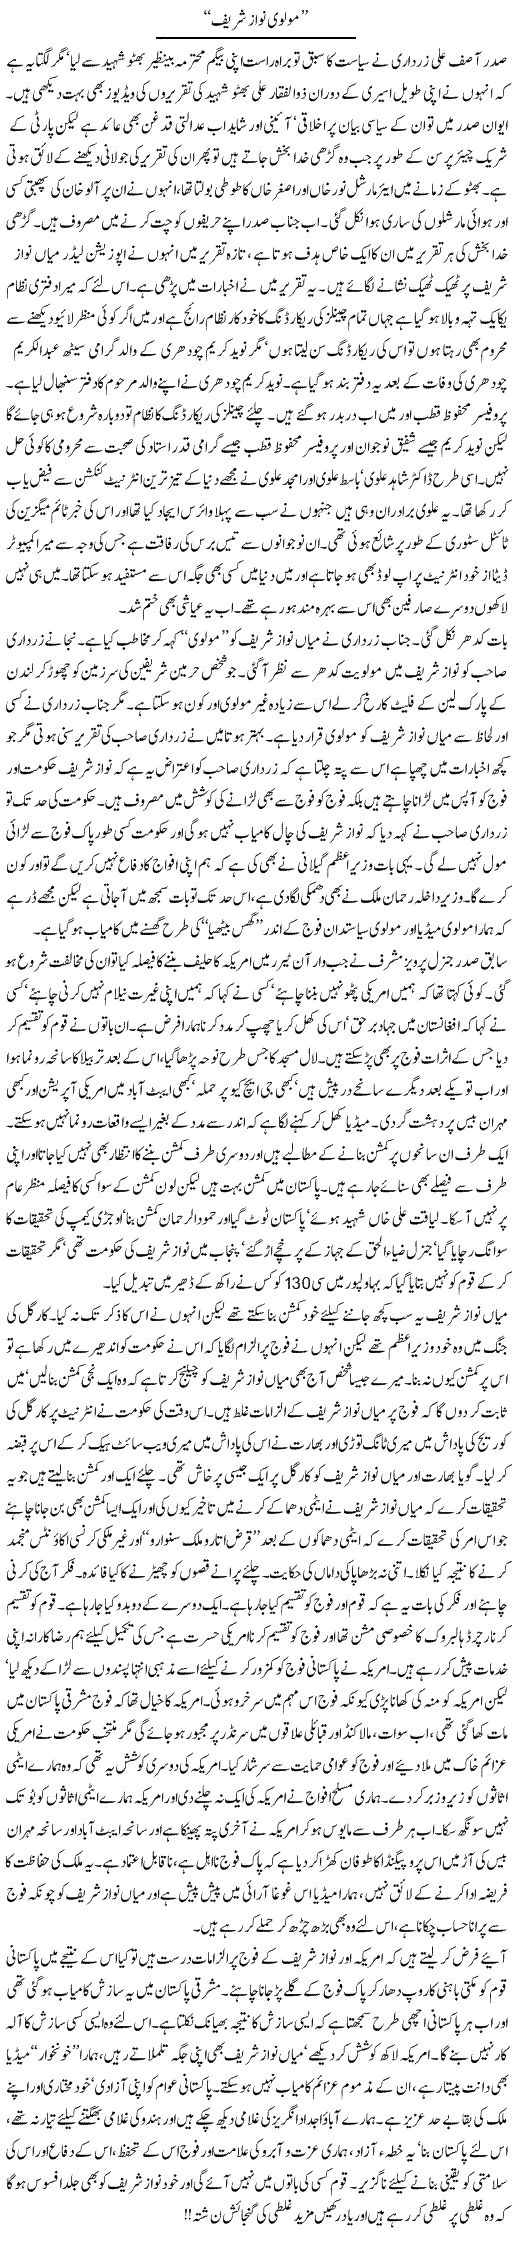 Molvi Nawaz Sharif Express Column Asadullah Ghalib 23 June 2011